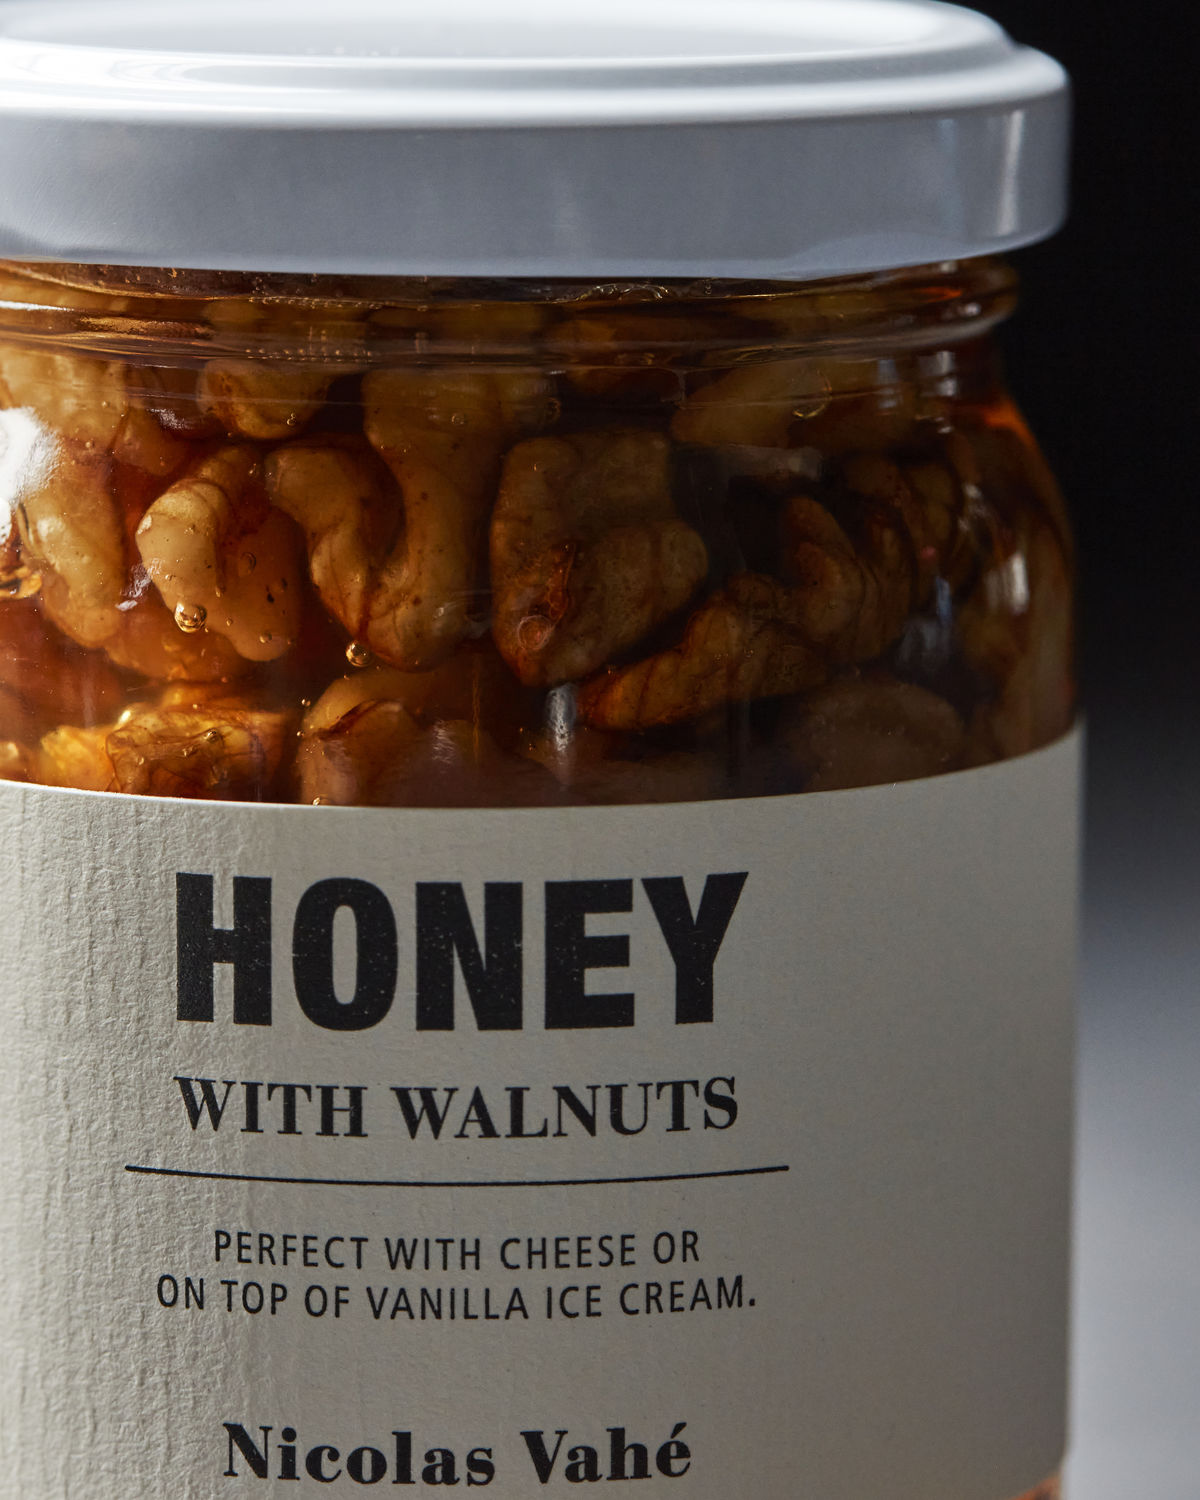 Walnut Honey